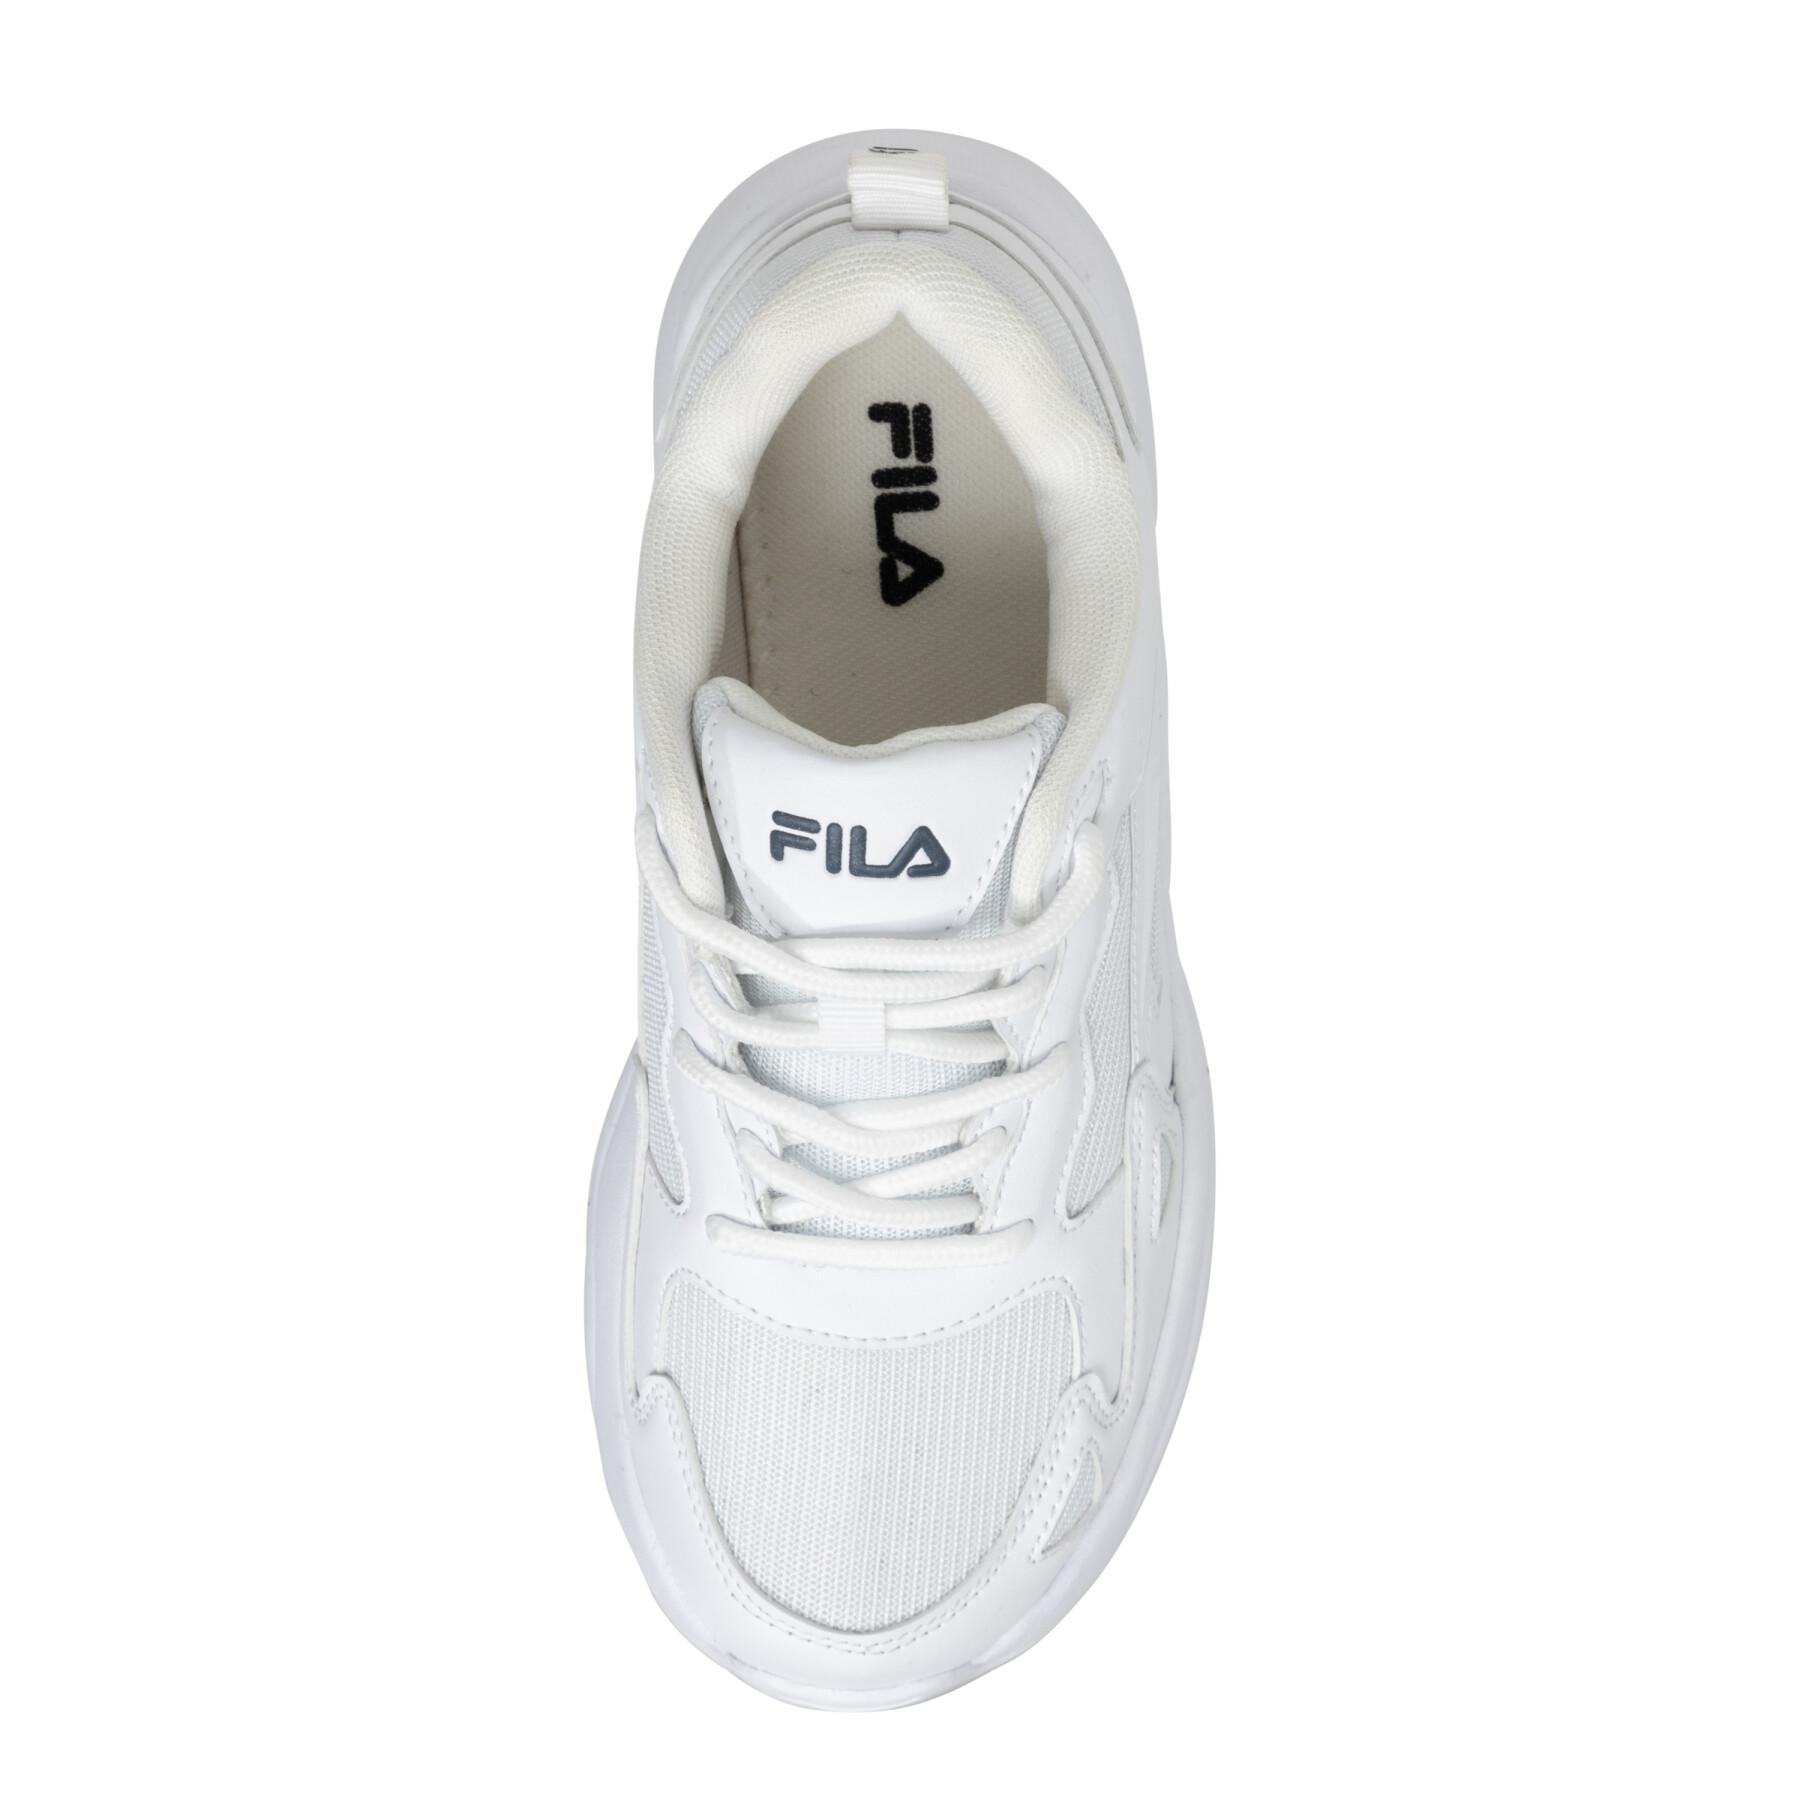 Children's sneakers Fila Ventosa